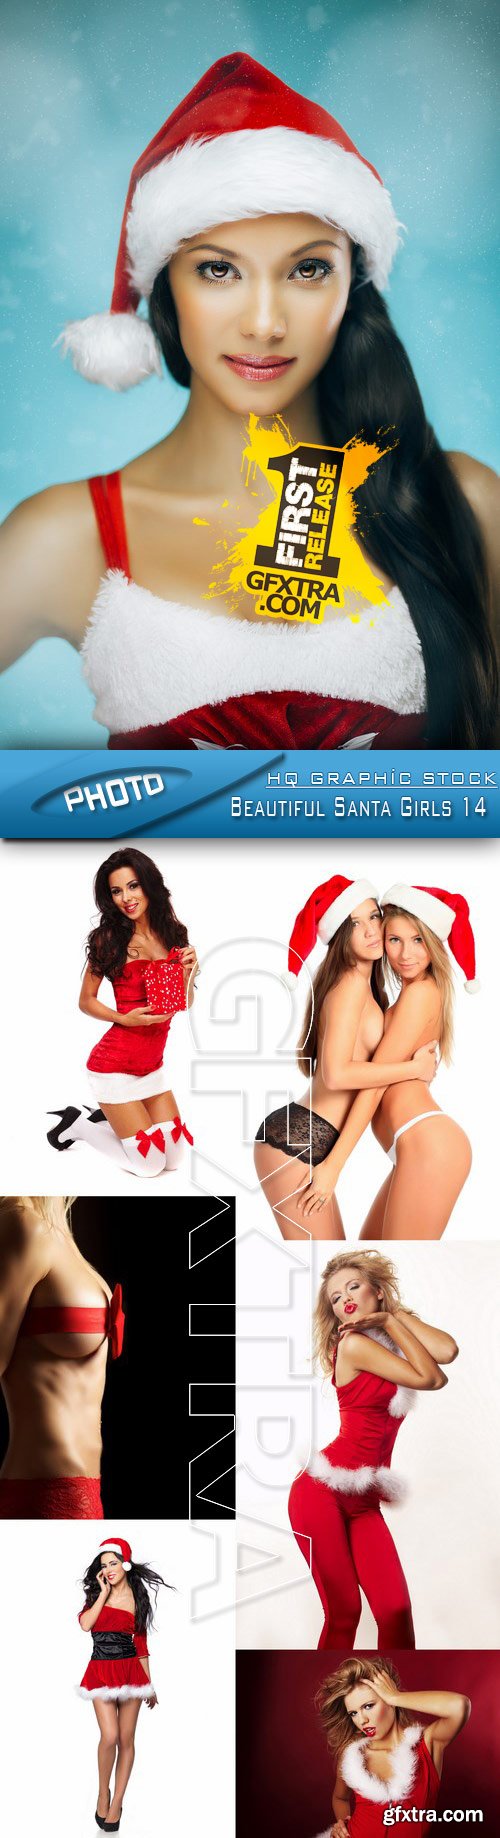 Beautiful Santa Girls 14, 7xJPG